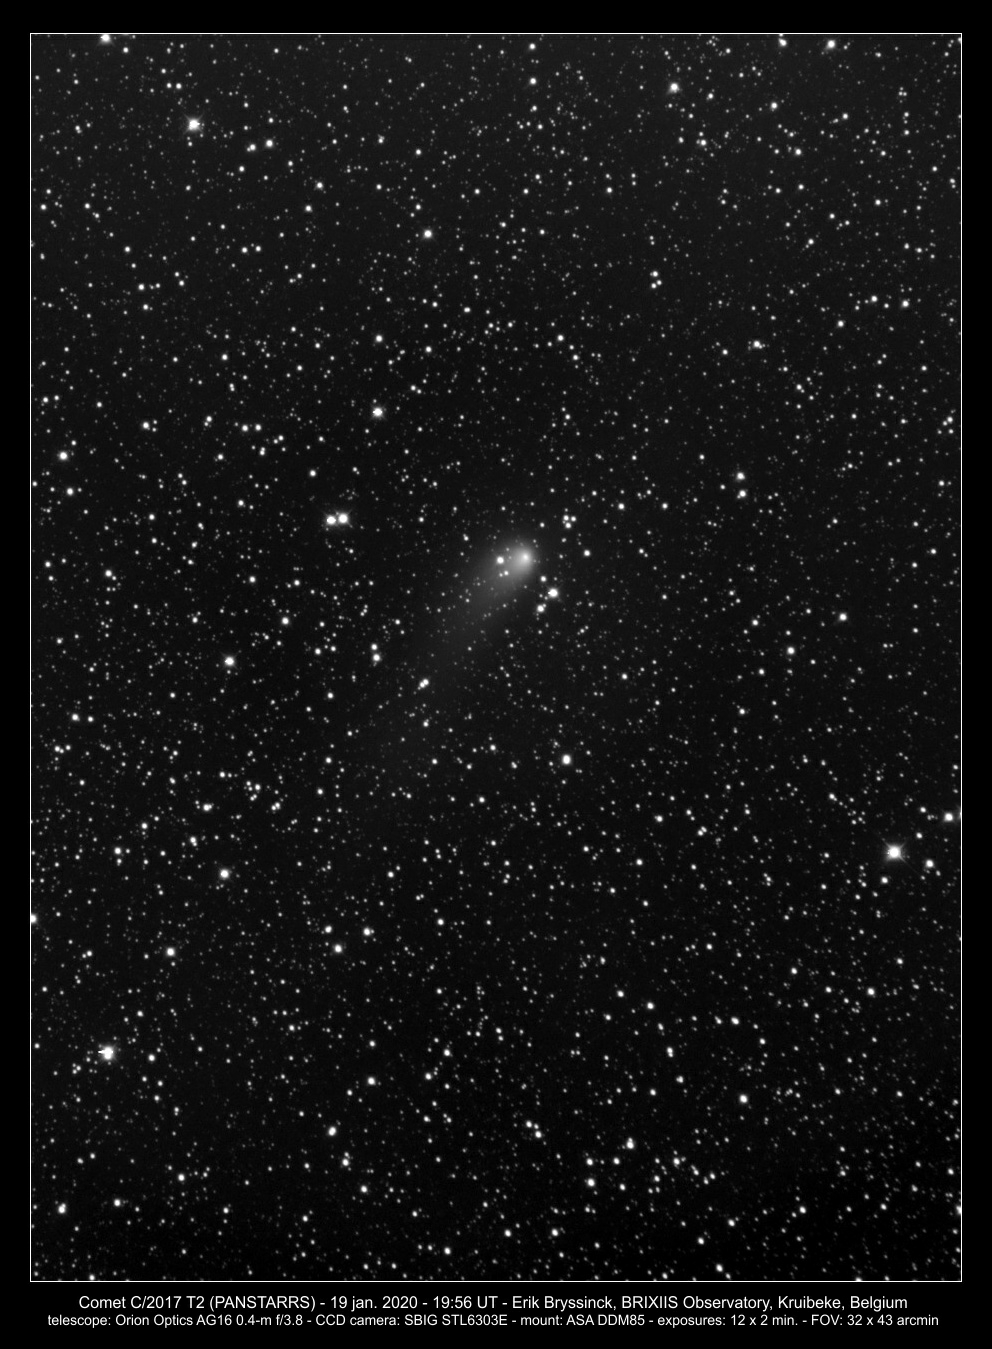 comet C/2017 T2 (PANSTARRS) on 19 jan.2020, Erik Bryssinck, BRIXIIS Observatory, B96 observatory